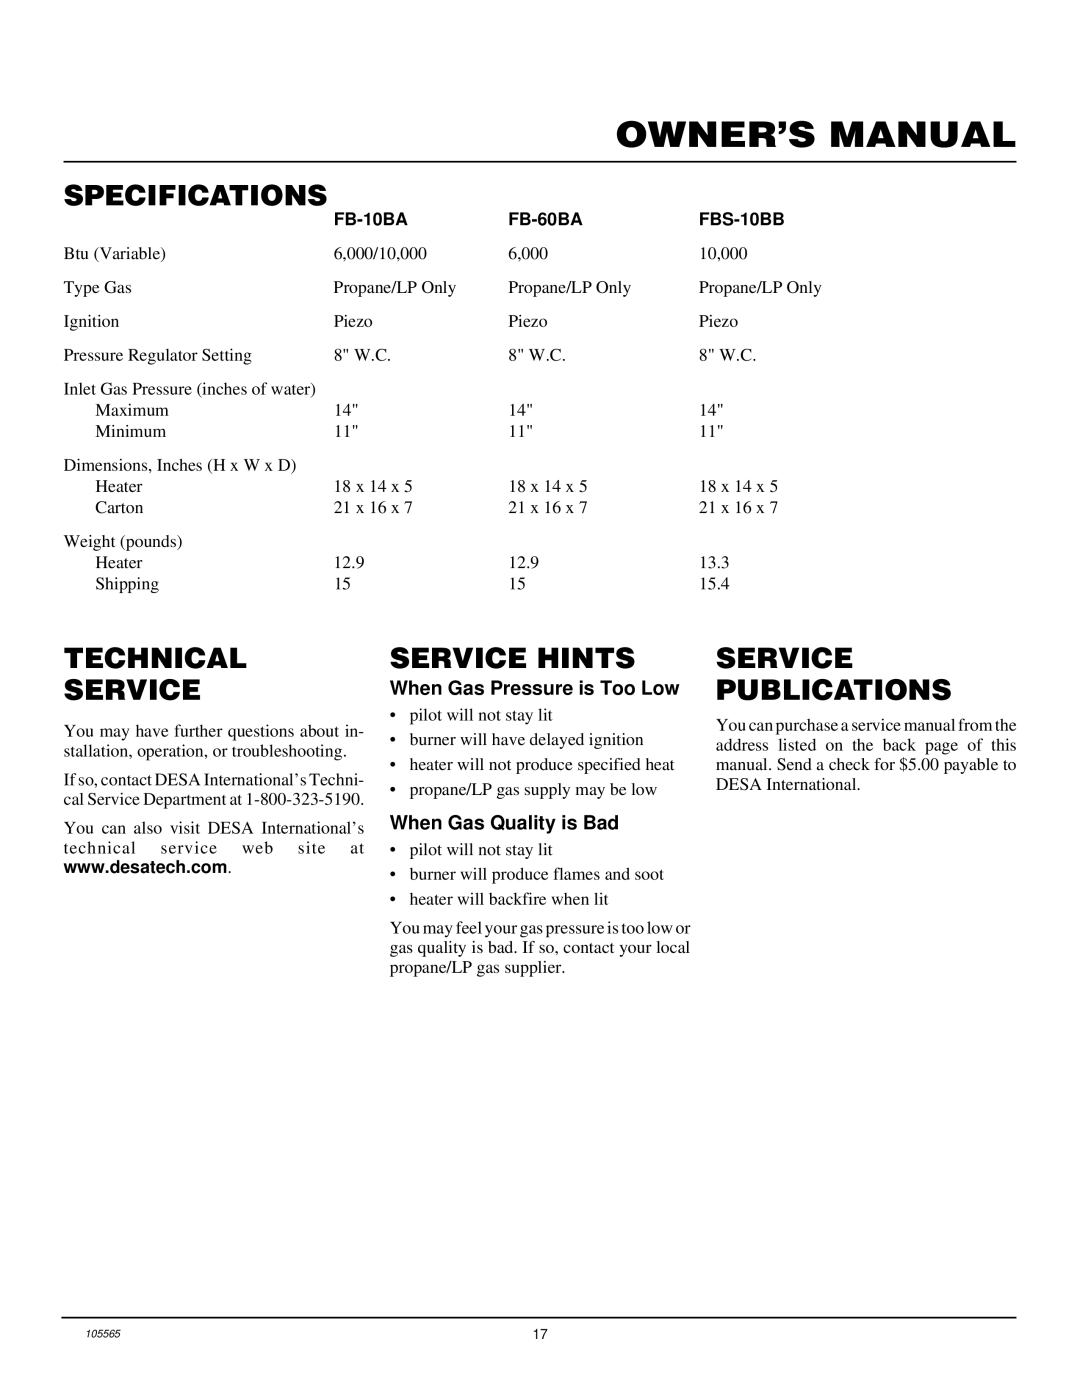 Desa FB-10BA installation manual Specifications, Technical Service, Service Hints, Service Publications 